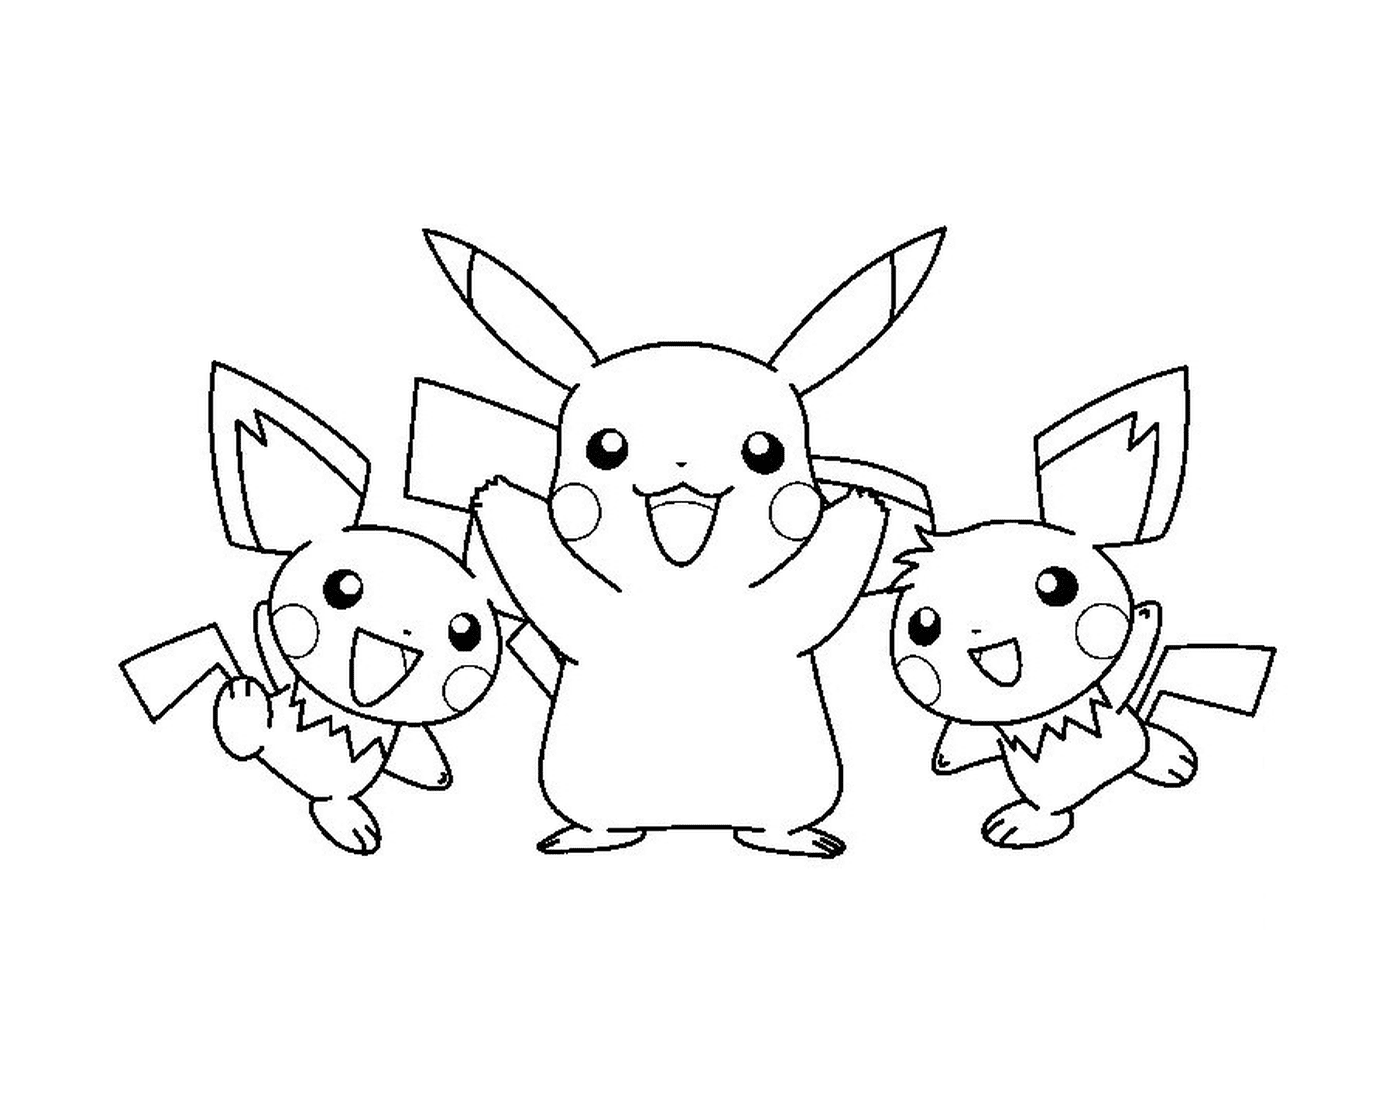  Tre Pokémon insieme 